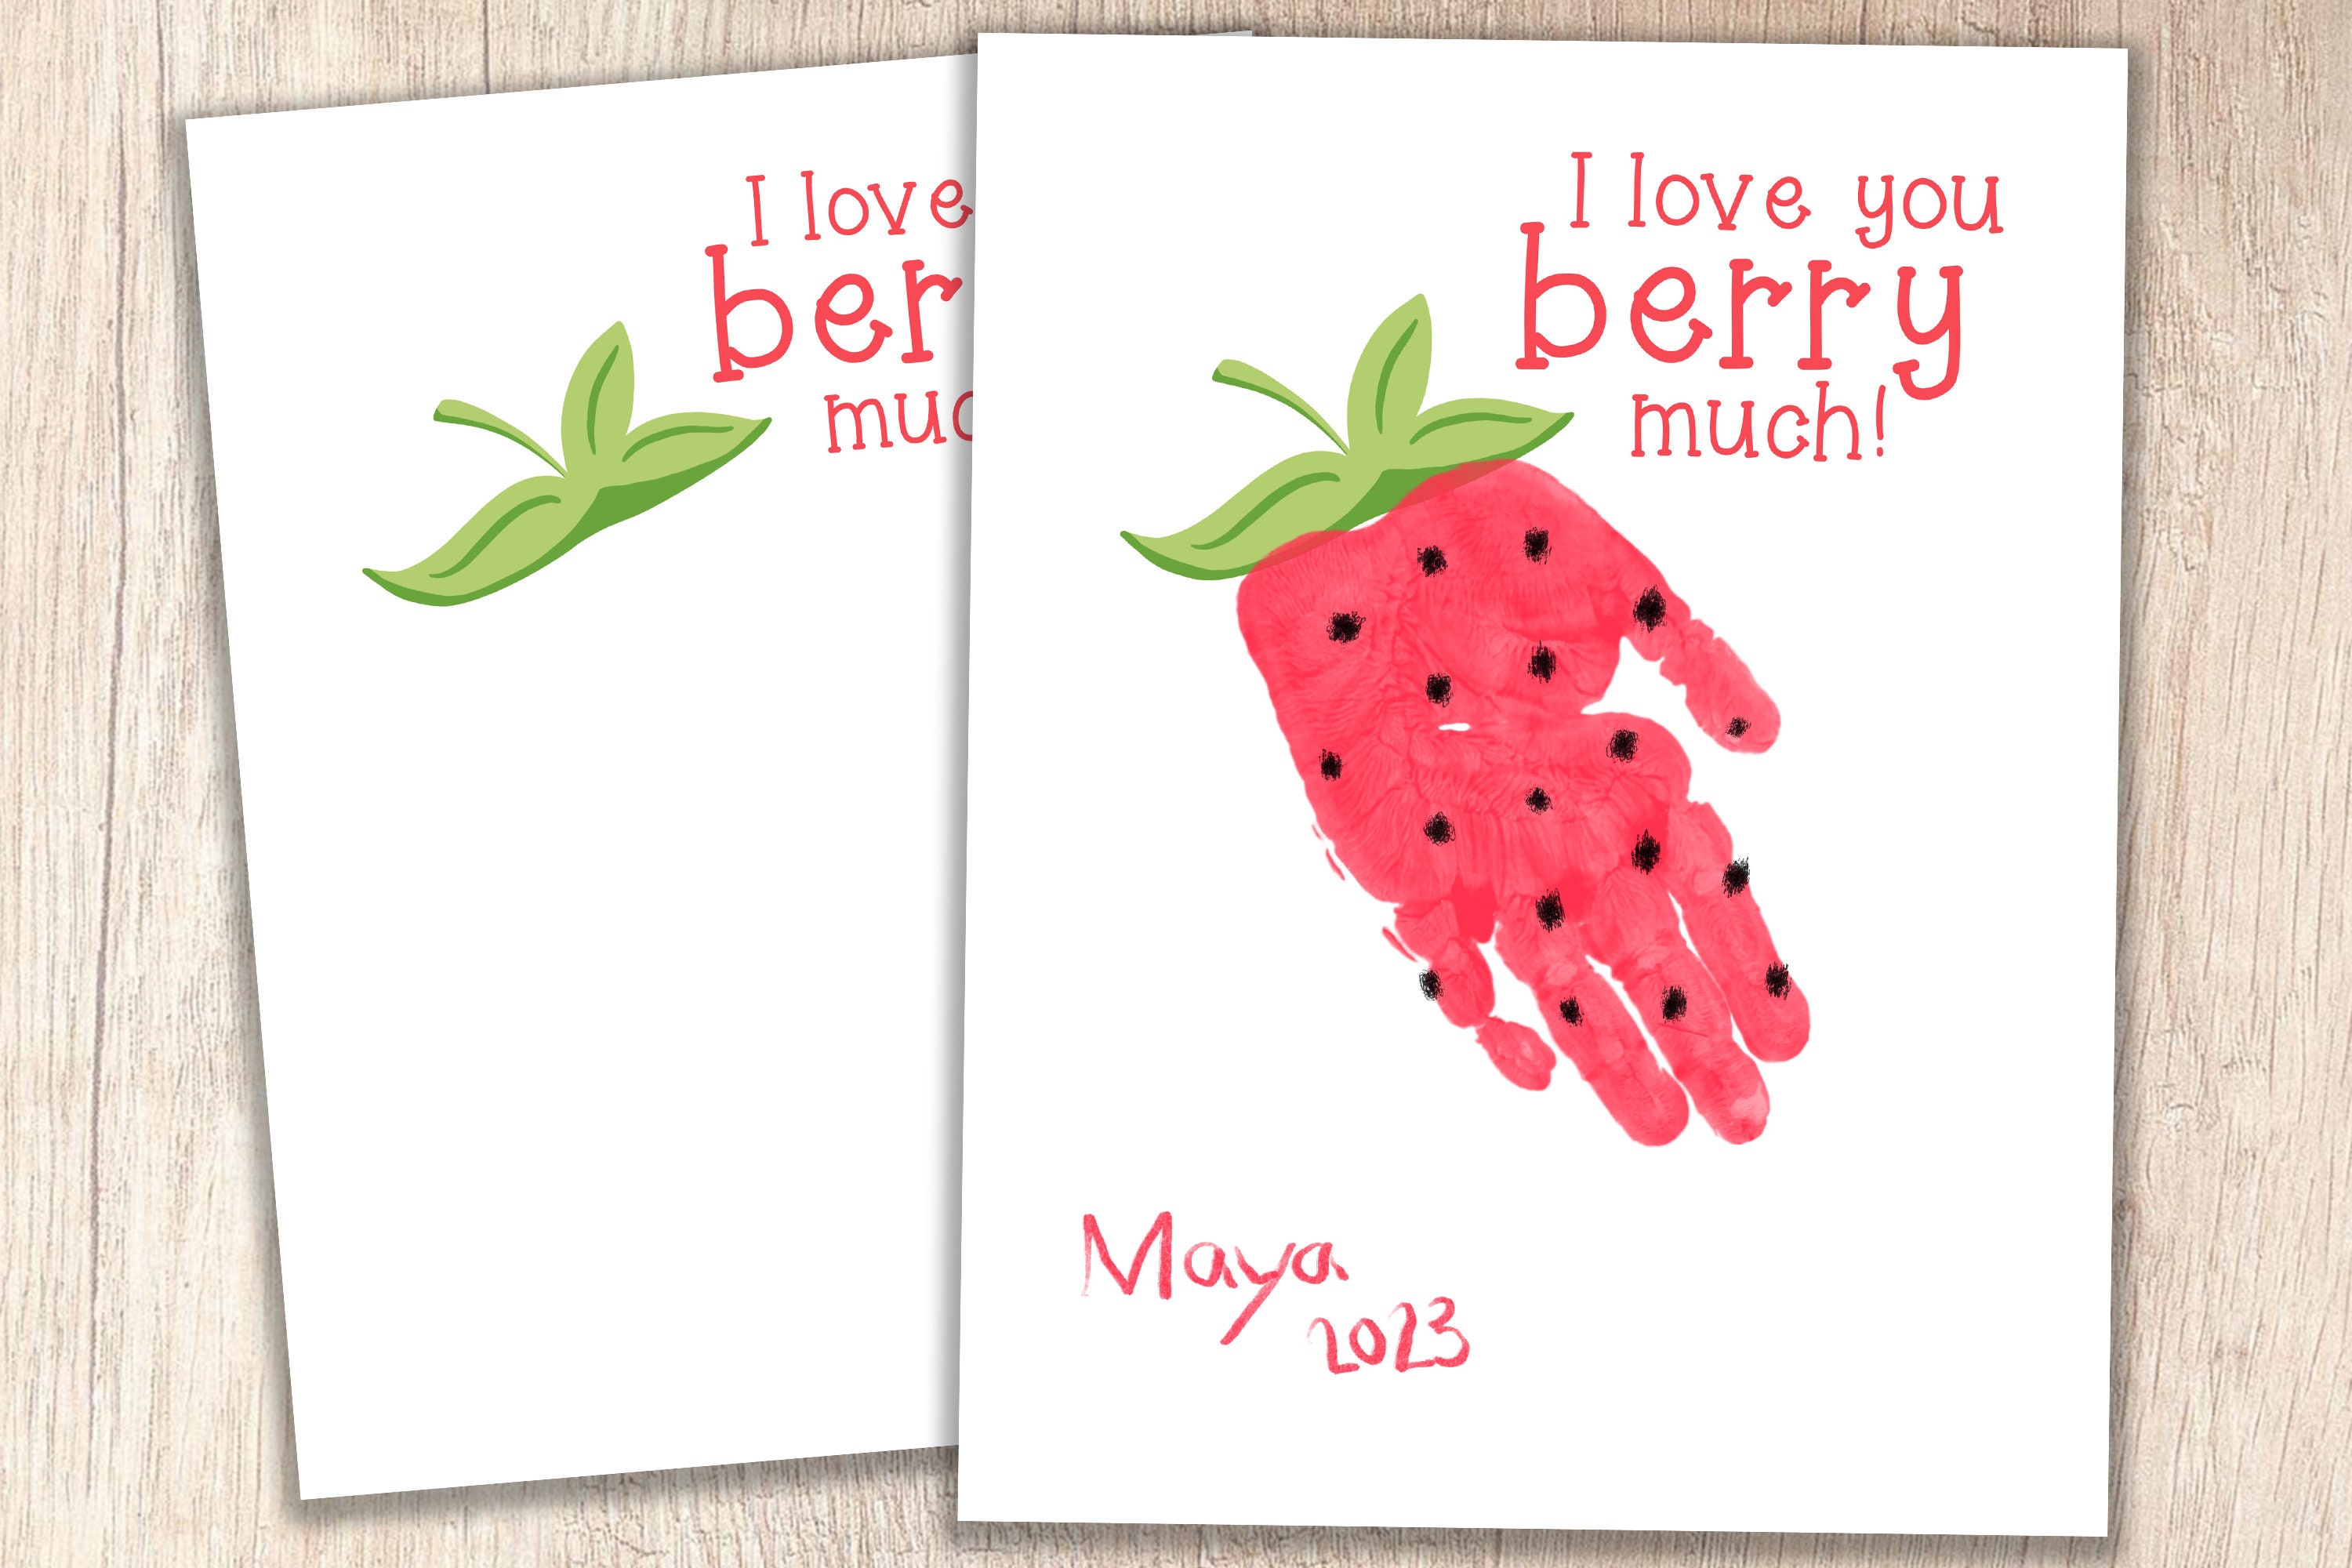 102 Reasons Why I Love You + Printables - Shari's Berries Blog